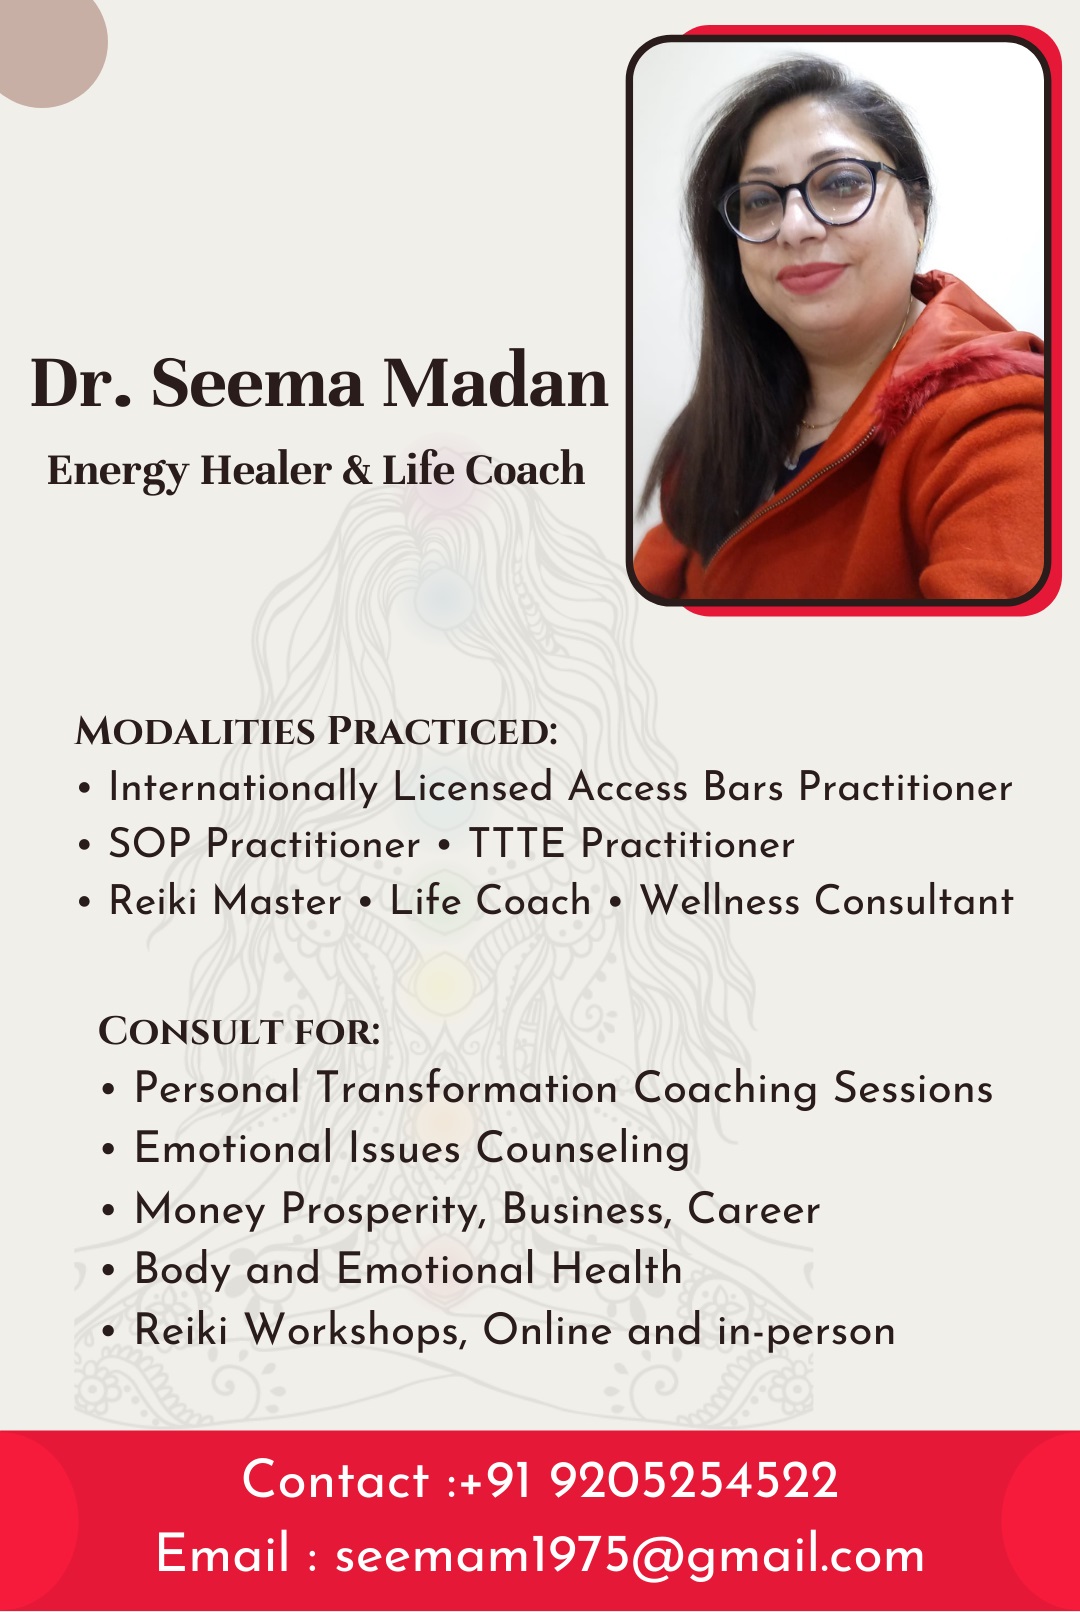 Dr. Seema Madan - Energy Healer & Life Coach - Guwahati